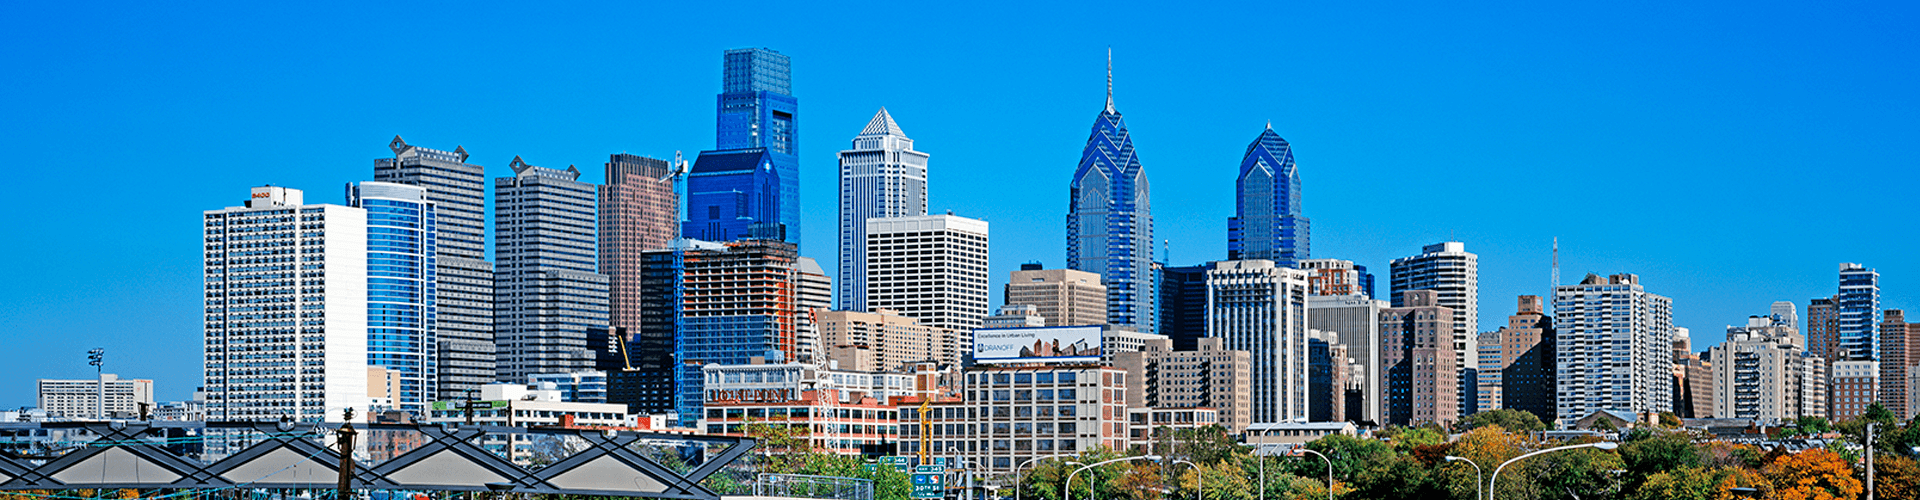 Header Image of Philadelphia